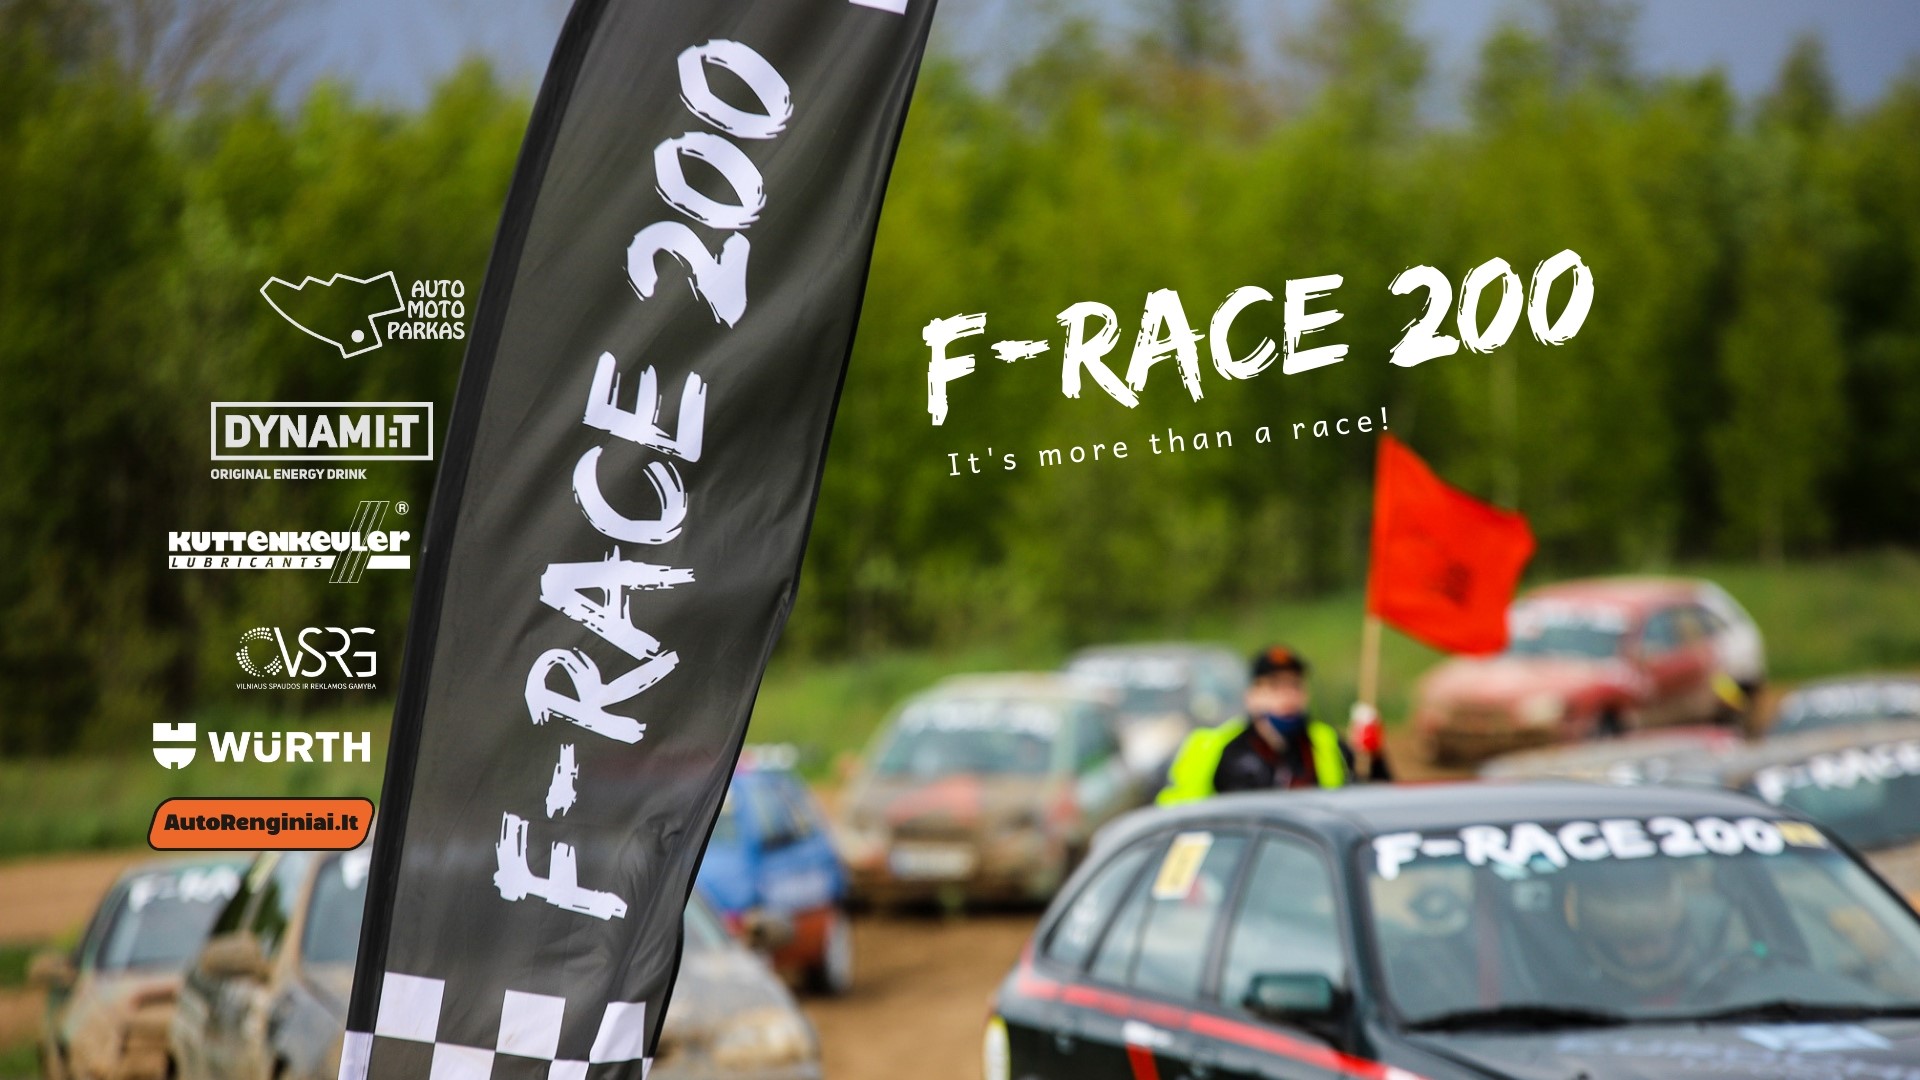 F-Race 200 - it's more than a race!